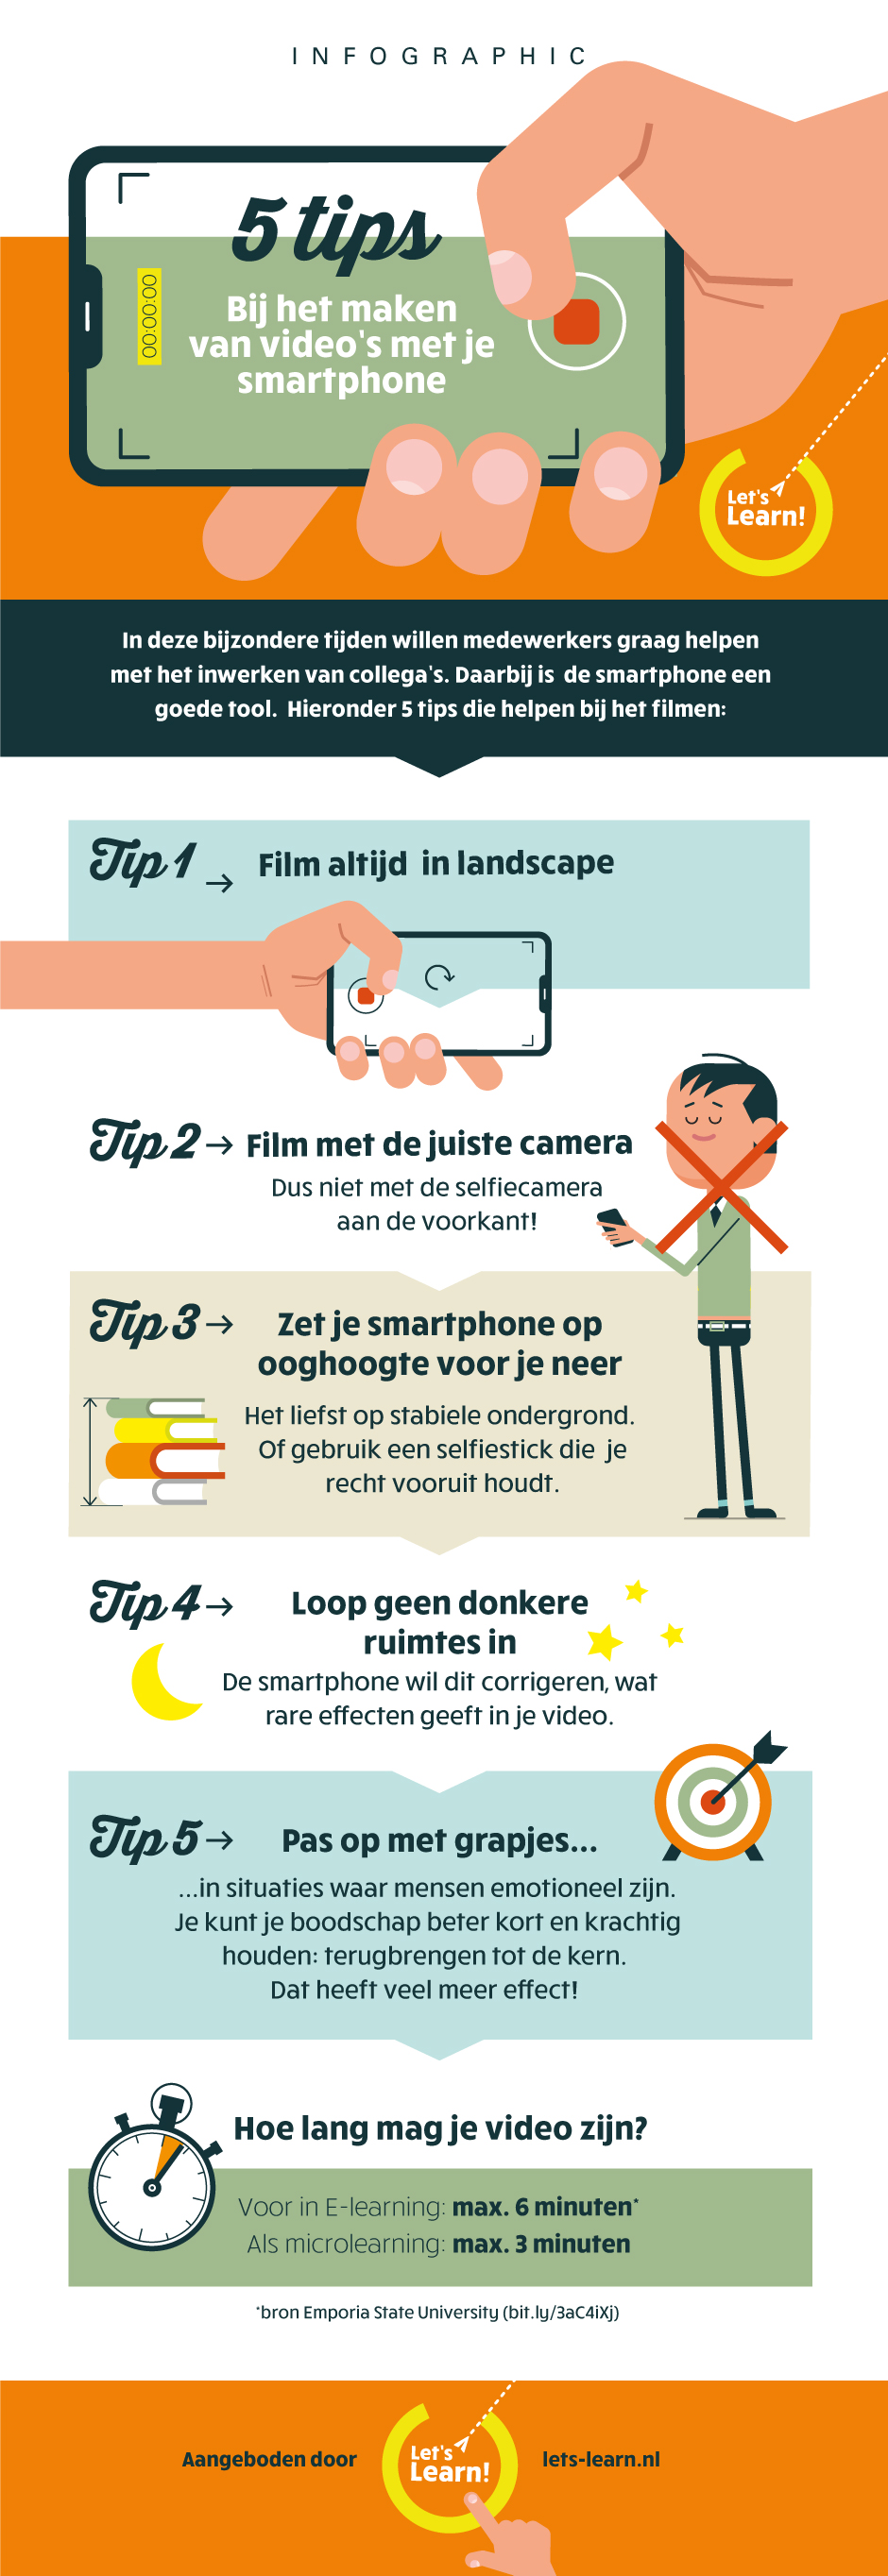 infographic laten maken, animatie laten maken, freelance illustrator, reclamebureau rotterdam, animatie laten maken Rotterdam, infographic laten maken Rotterdam